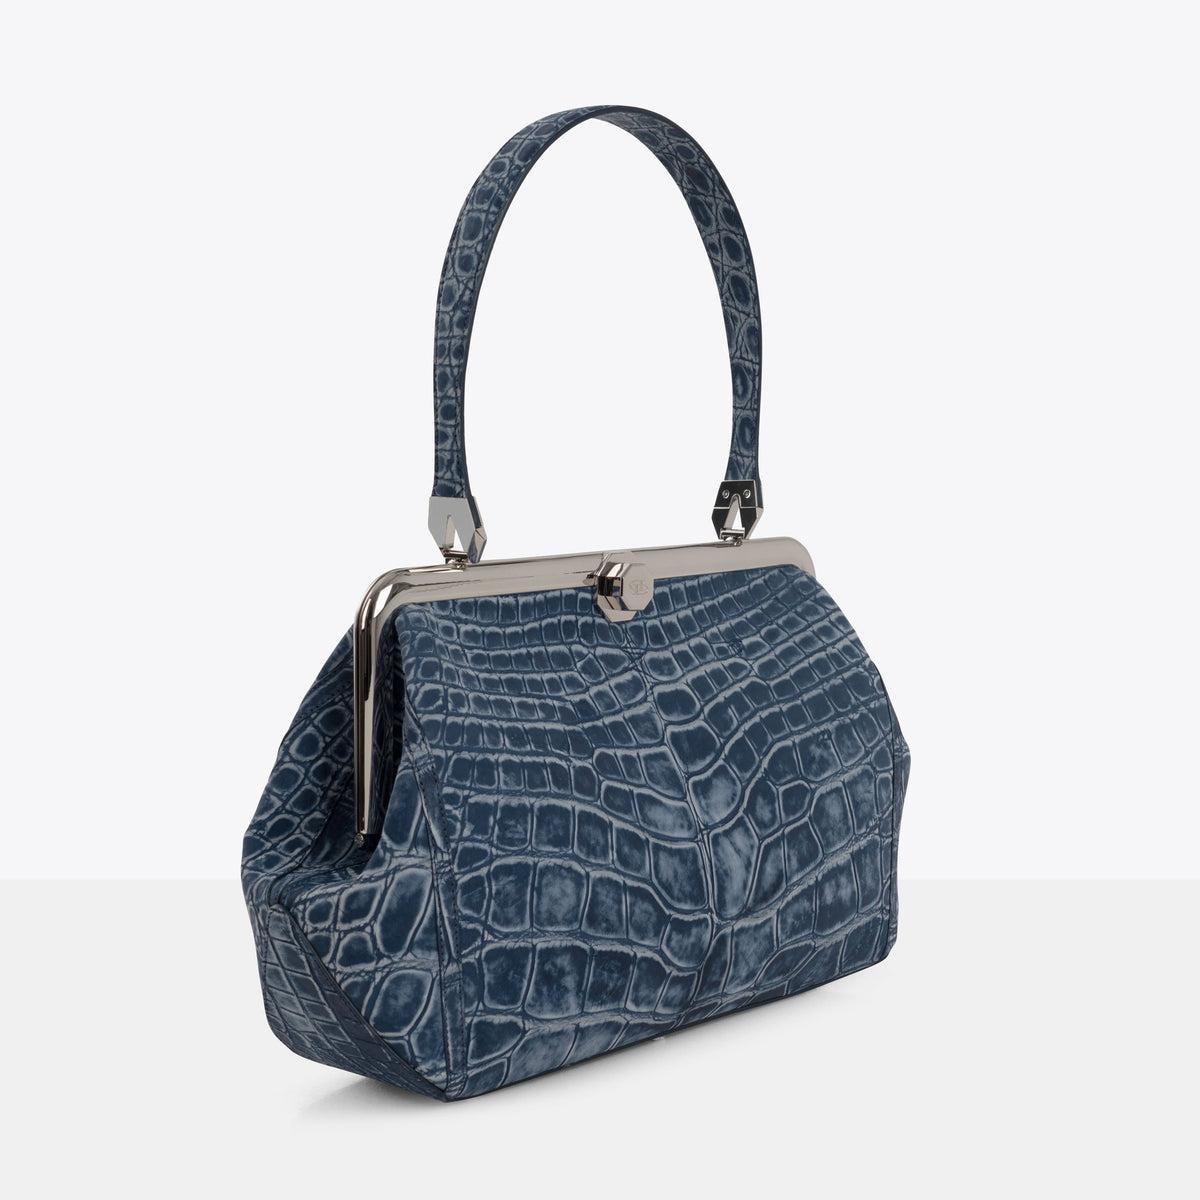 DOTTI Luna in Denim Alligator, Luxury Handbags.Made in Italy